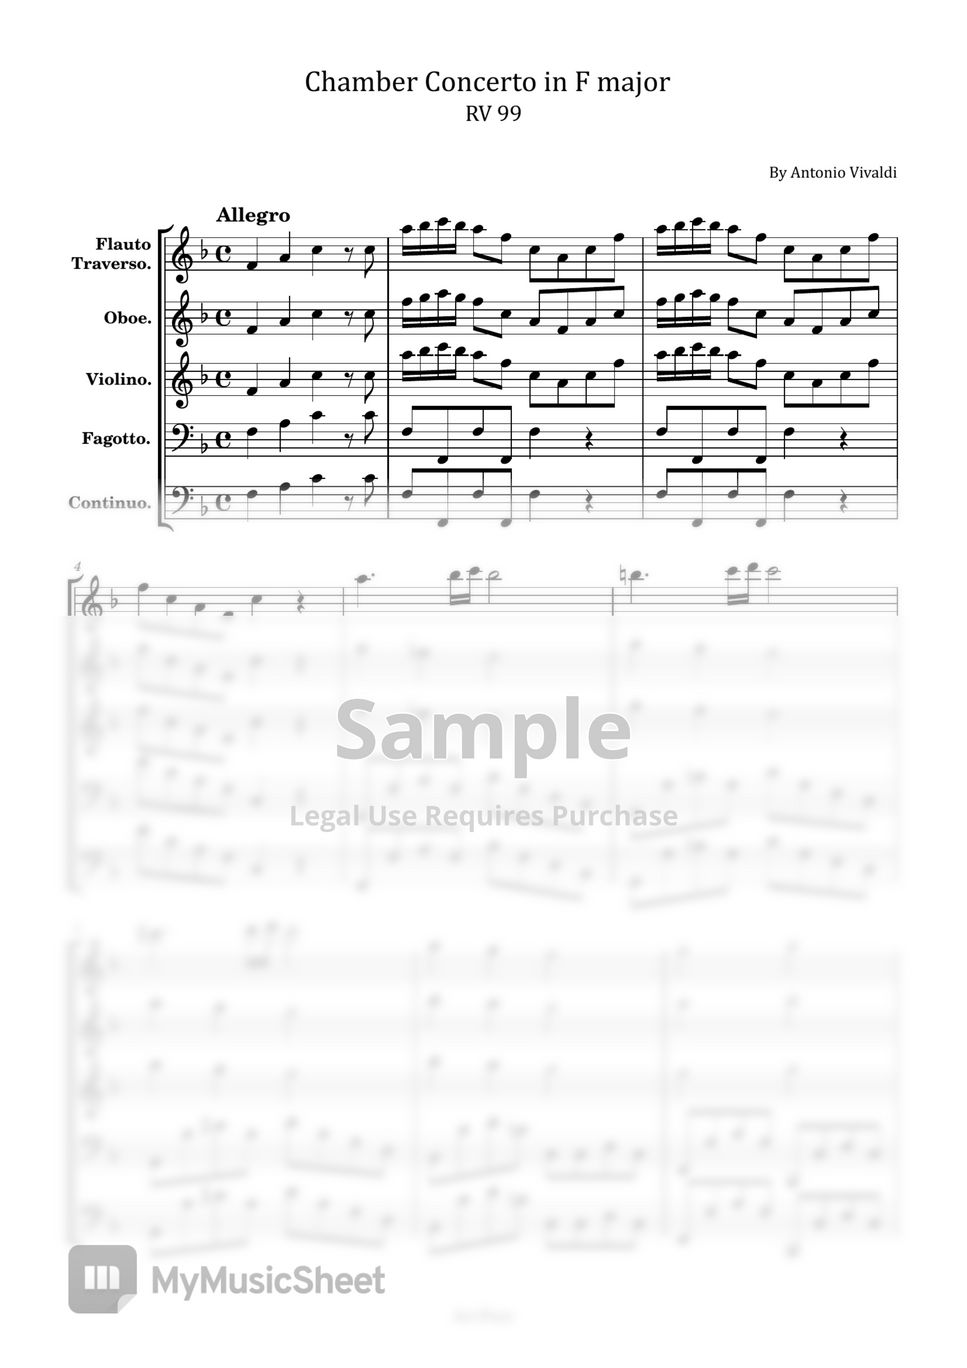 Antonio Vivaldi - Chamber Concerto in F major - RV 99 (For Flute, Oboe, Violin, Bassoon and Continuo Original Complete Score And Parts) by poon